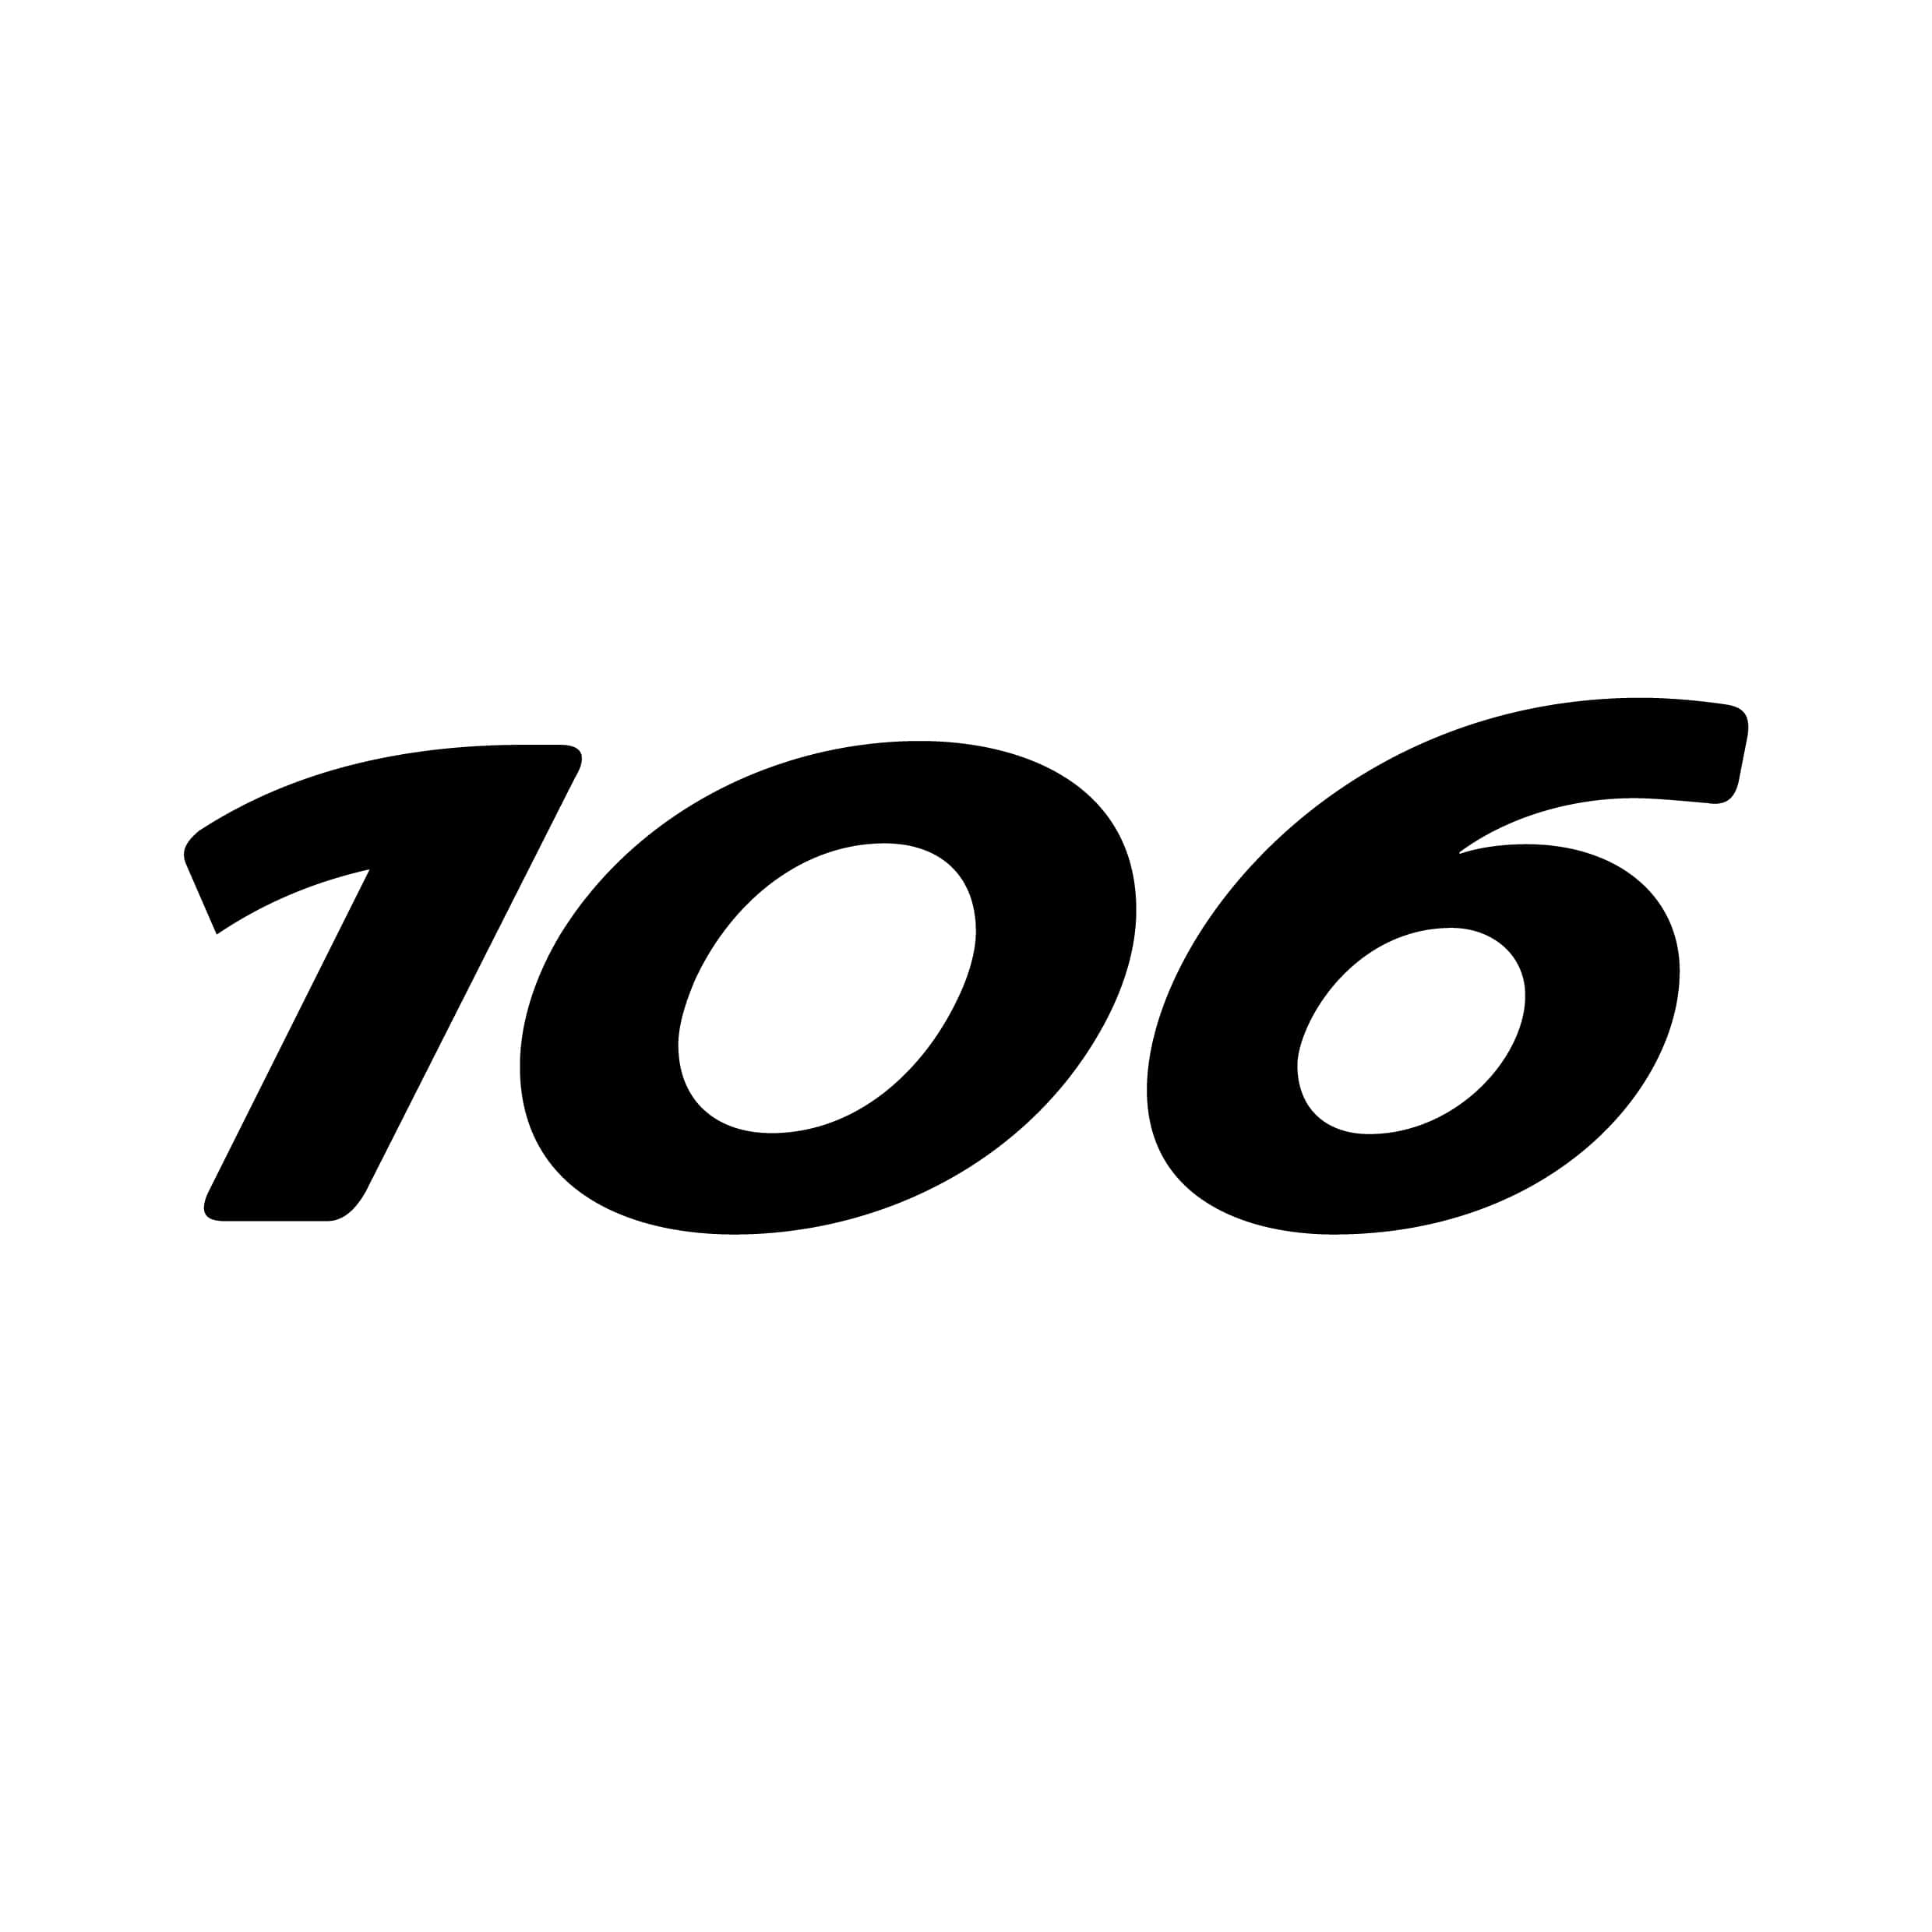 stickers-peugeot-106-ref57-autocollant-voiture-sticker-auto-autocollants-decals-sponsors-racing-tuning-sport-logo-min